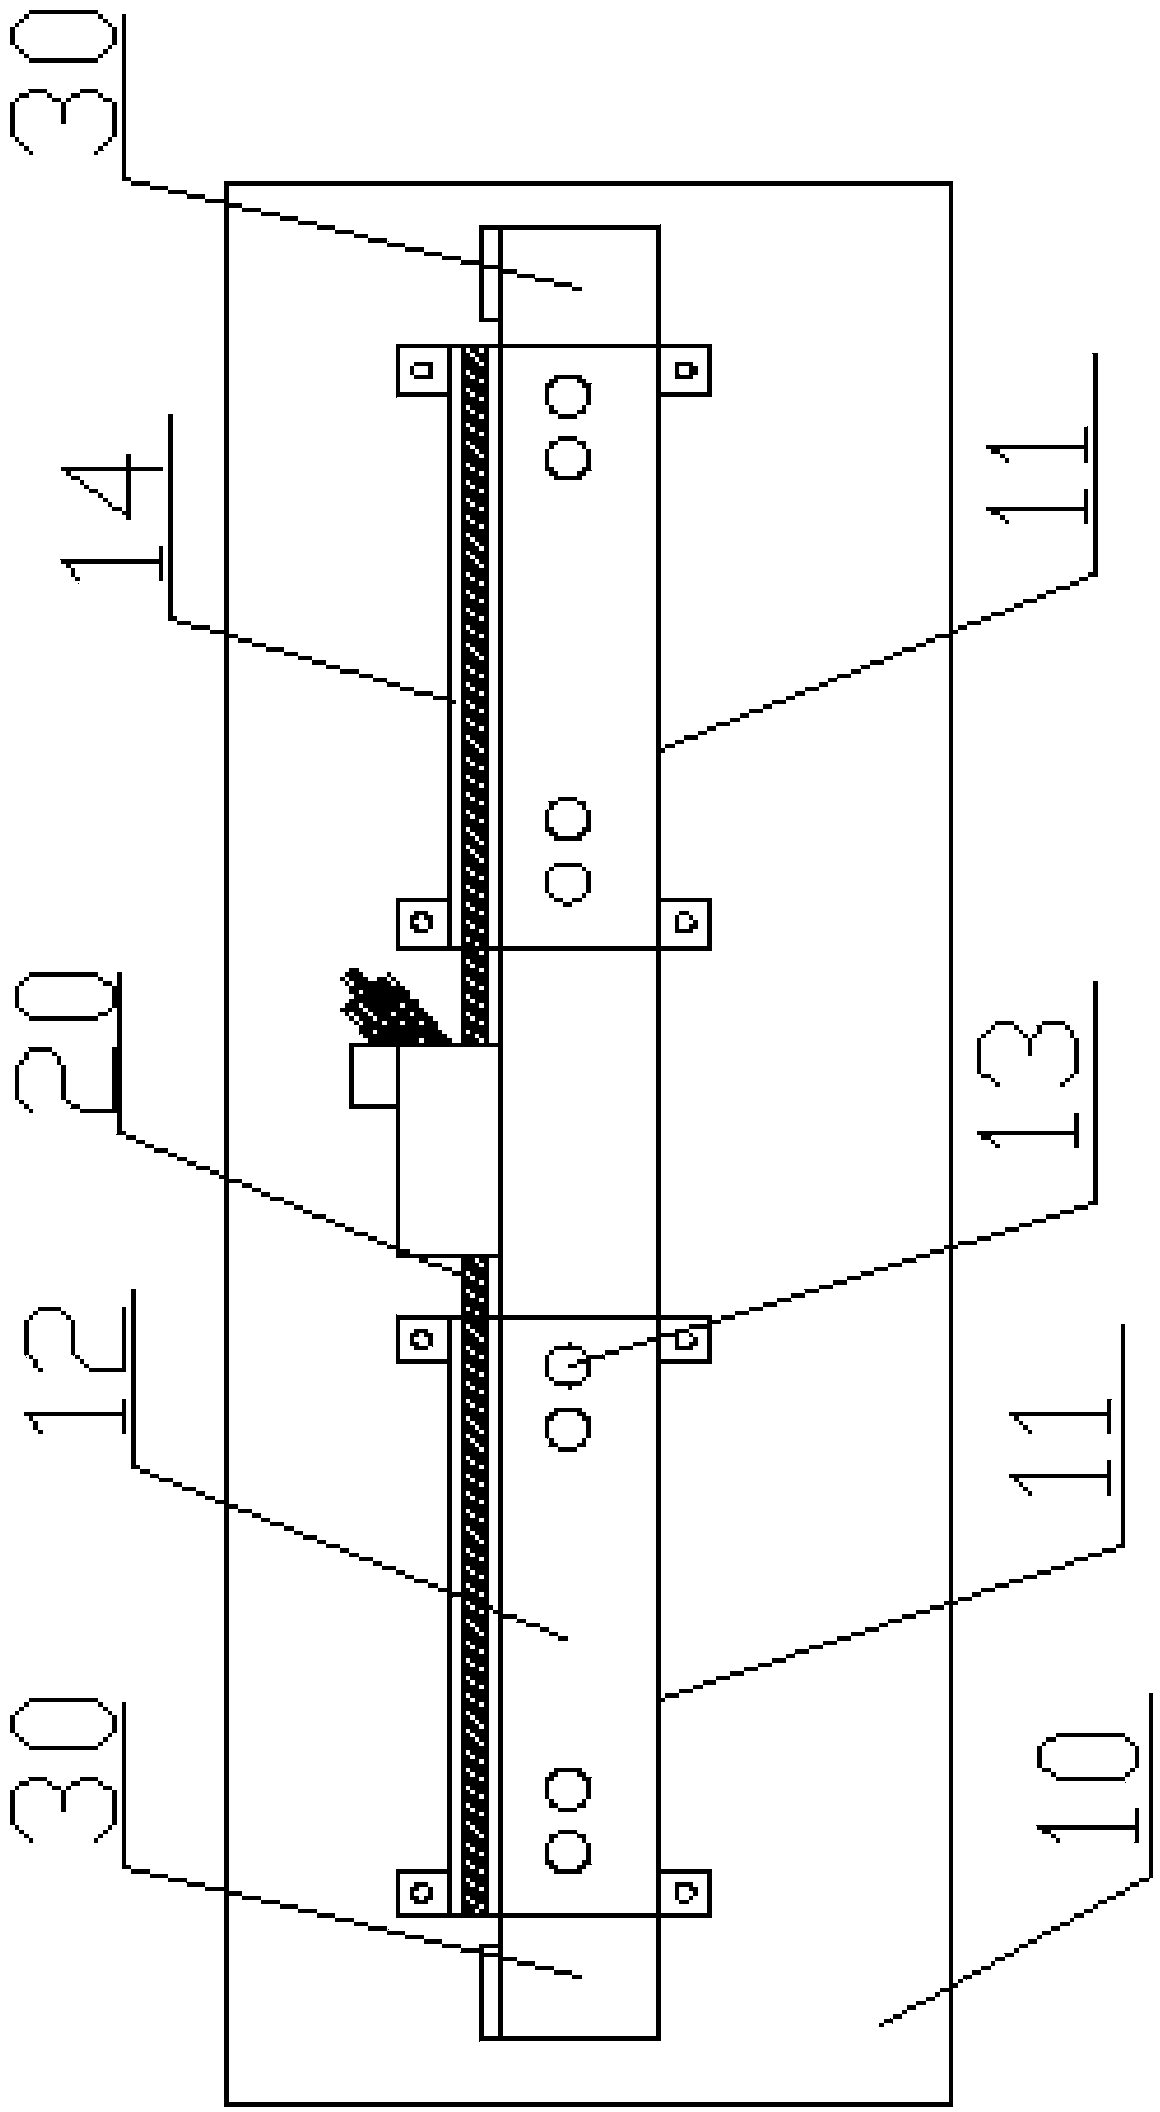 Assembly structure of front end framework of automobile skylight framework